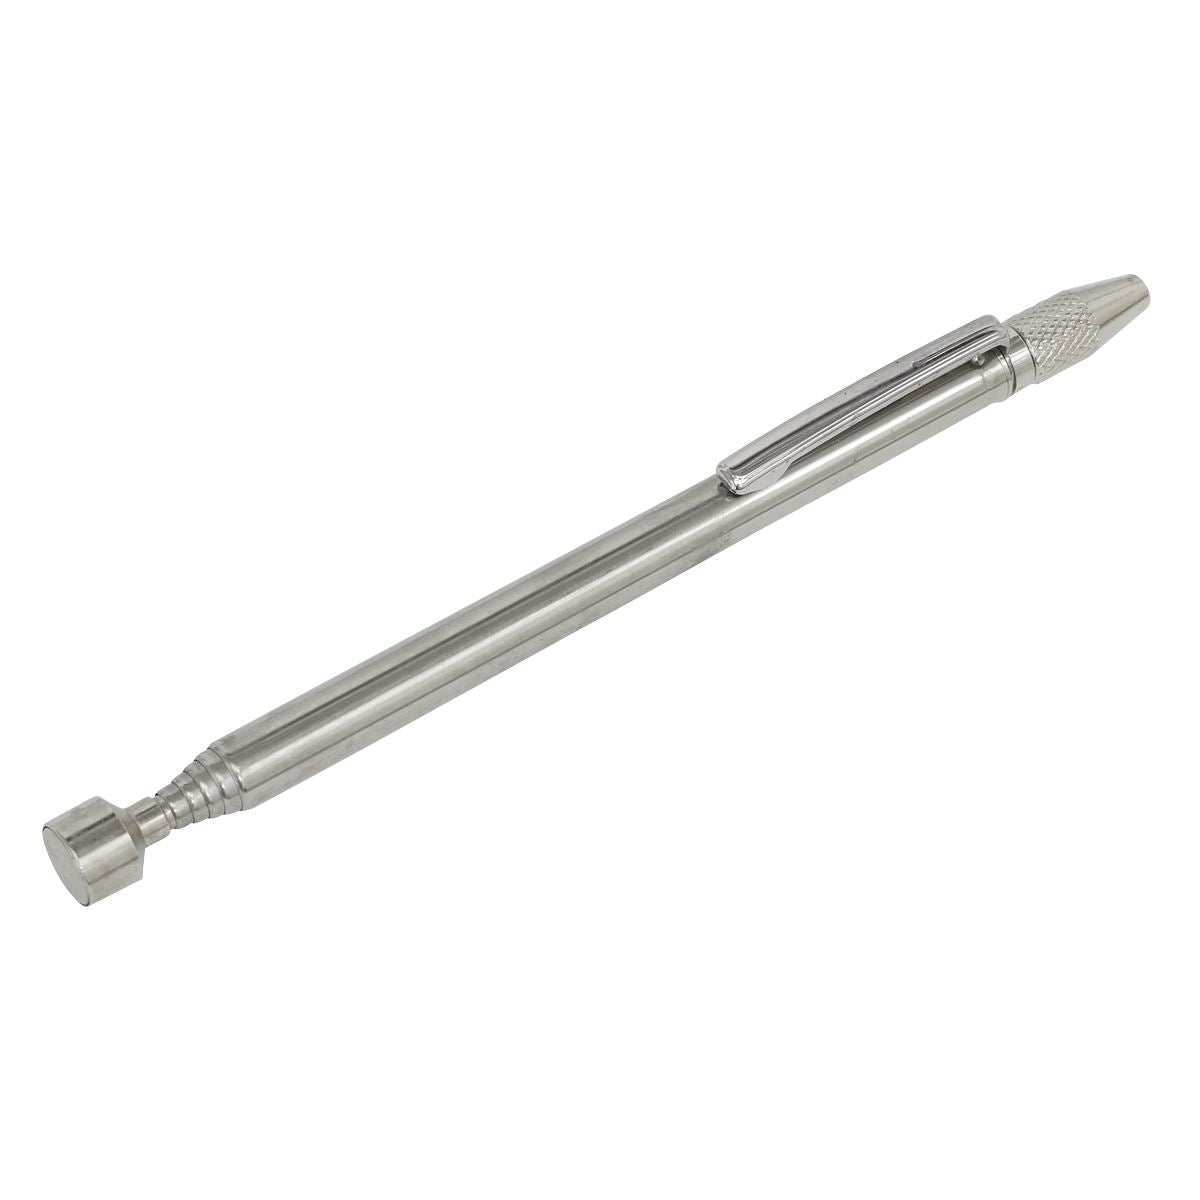 Sealey Premier Magnetic Pick-Up Tool 1.6kg Capacity